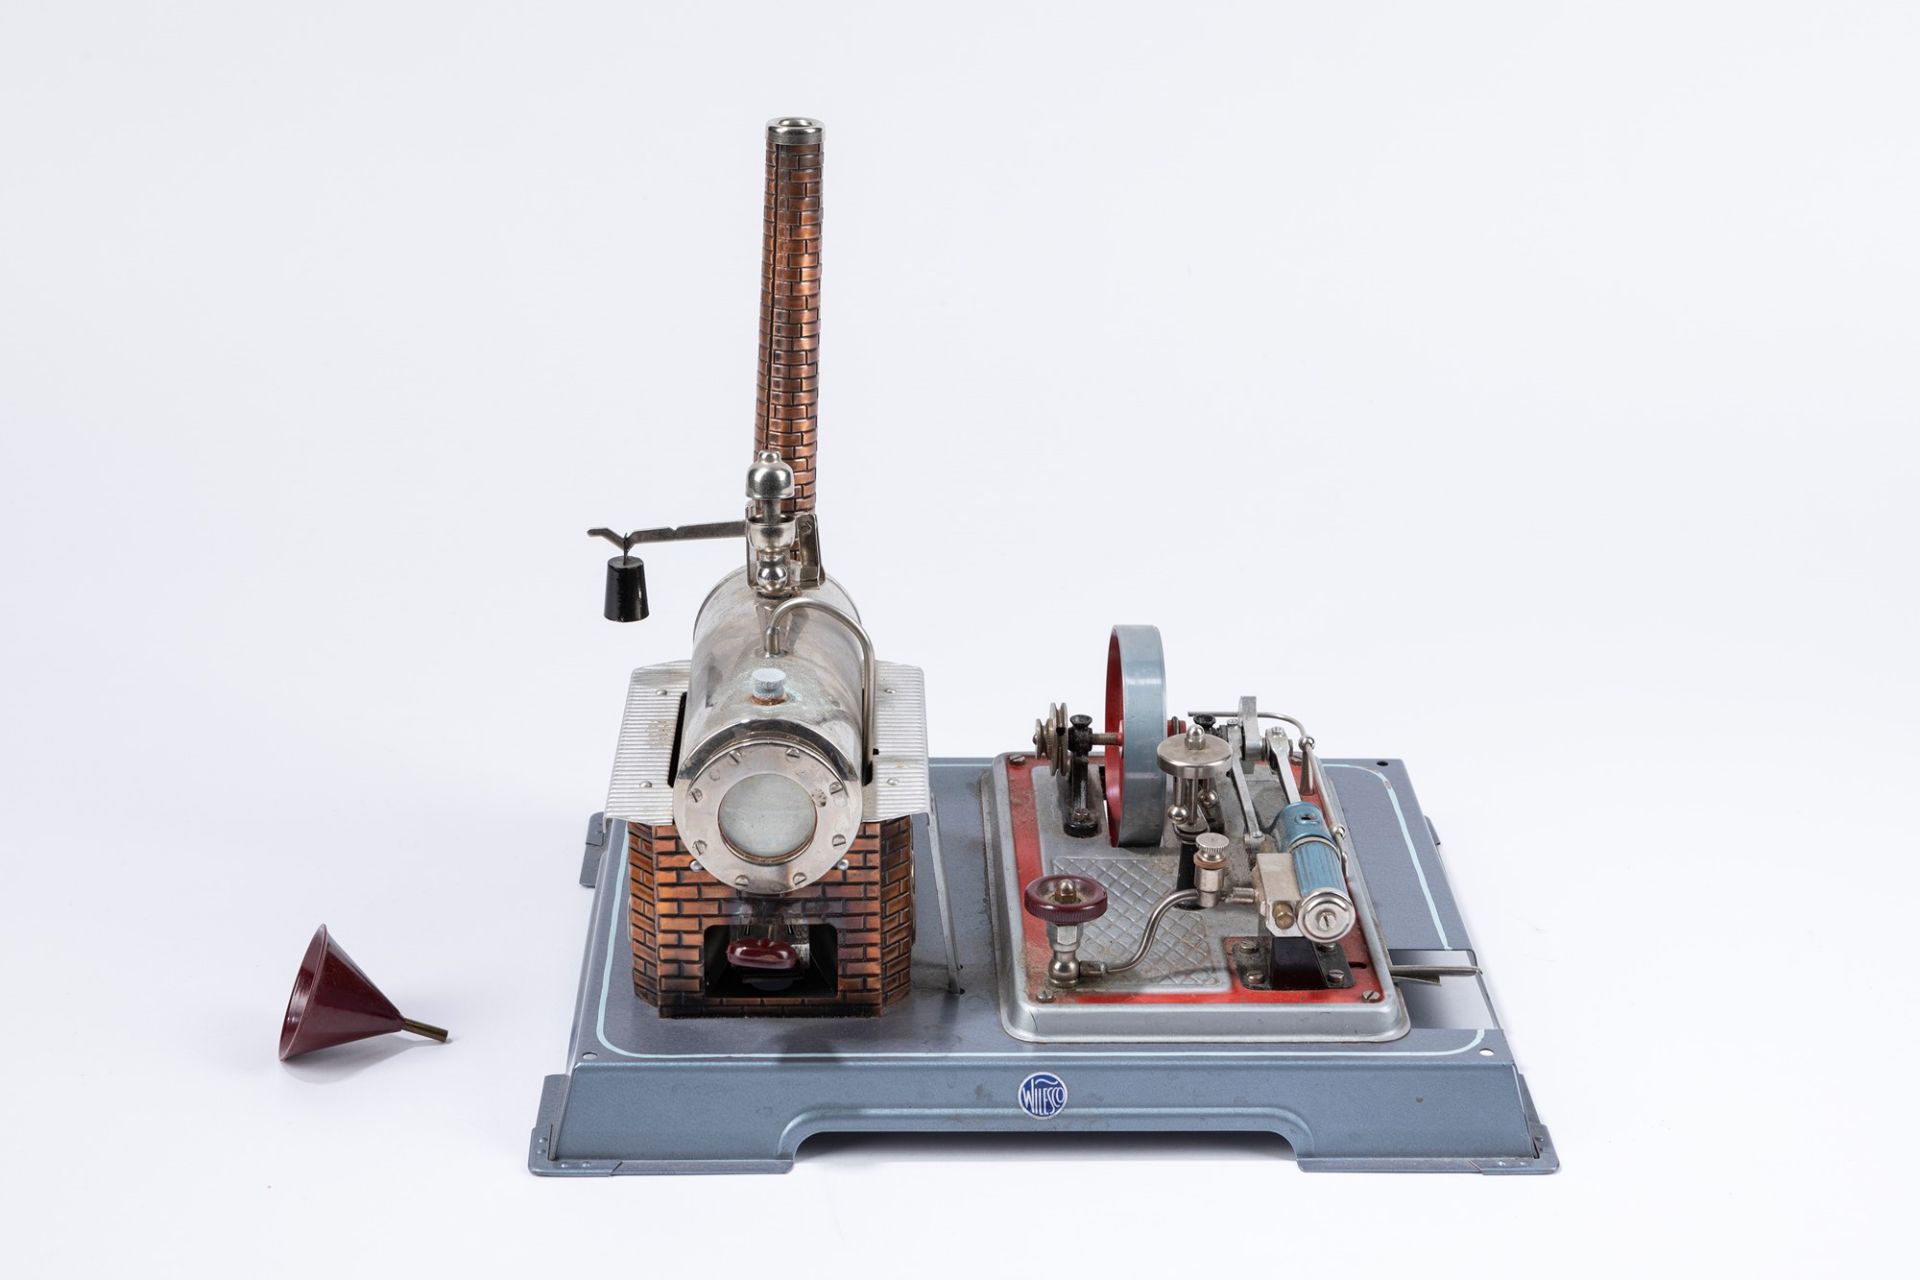 Wilesco - Industrial toy steam engine, 1960